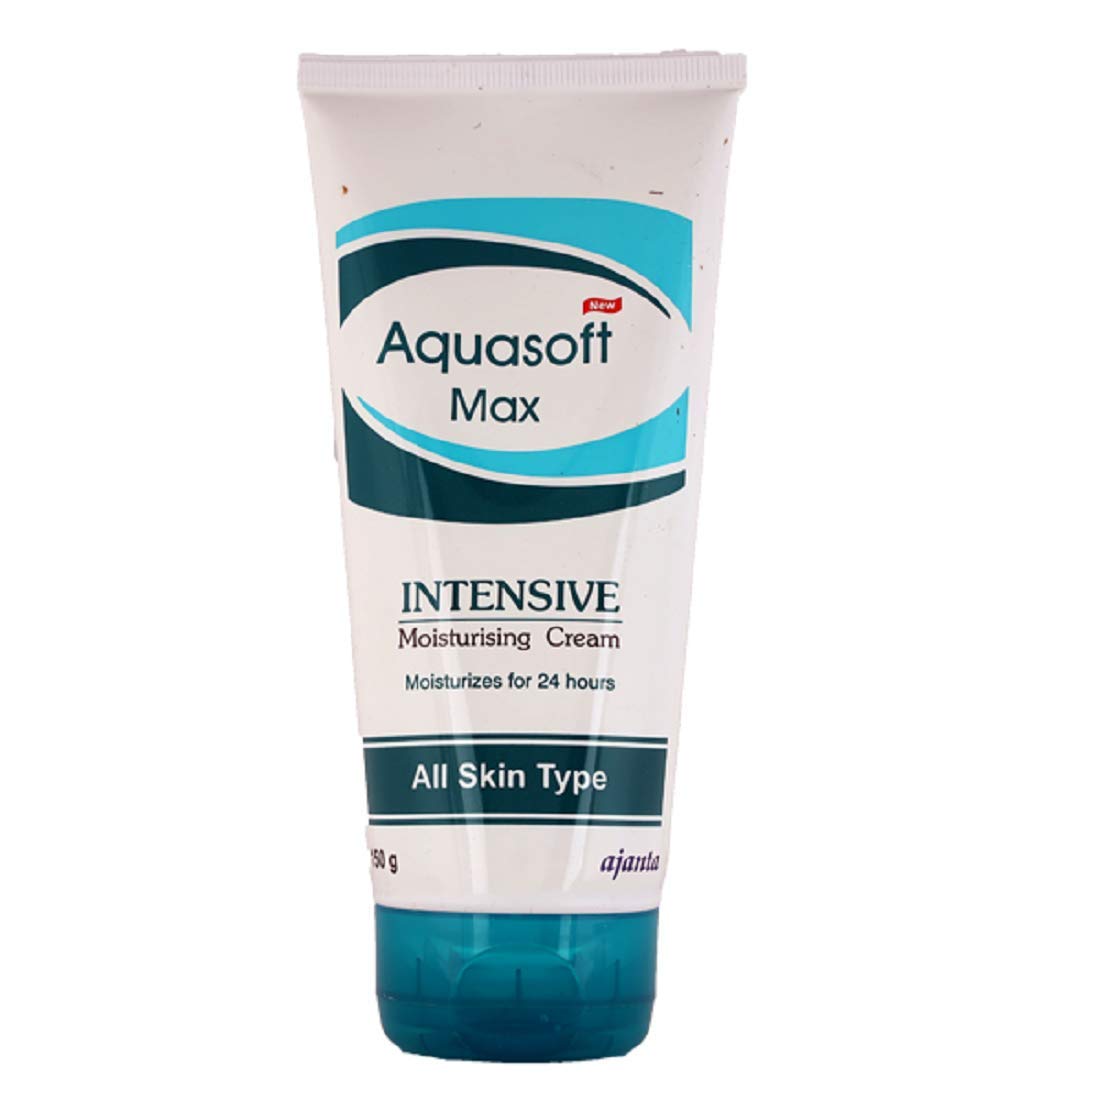 Aquasoft Max Intensive Moisturizing Cream, 150gm